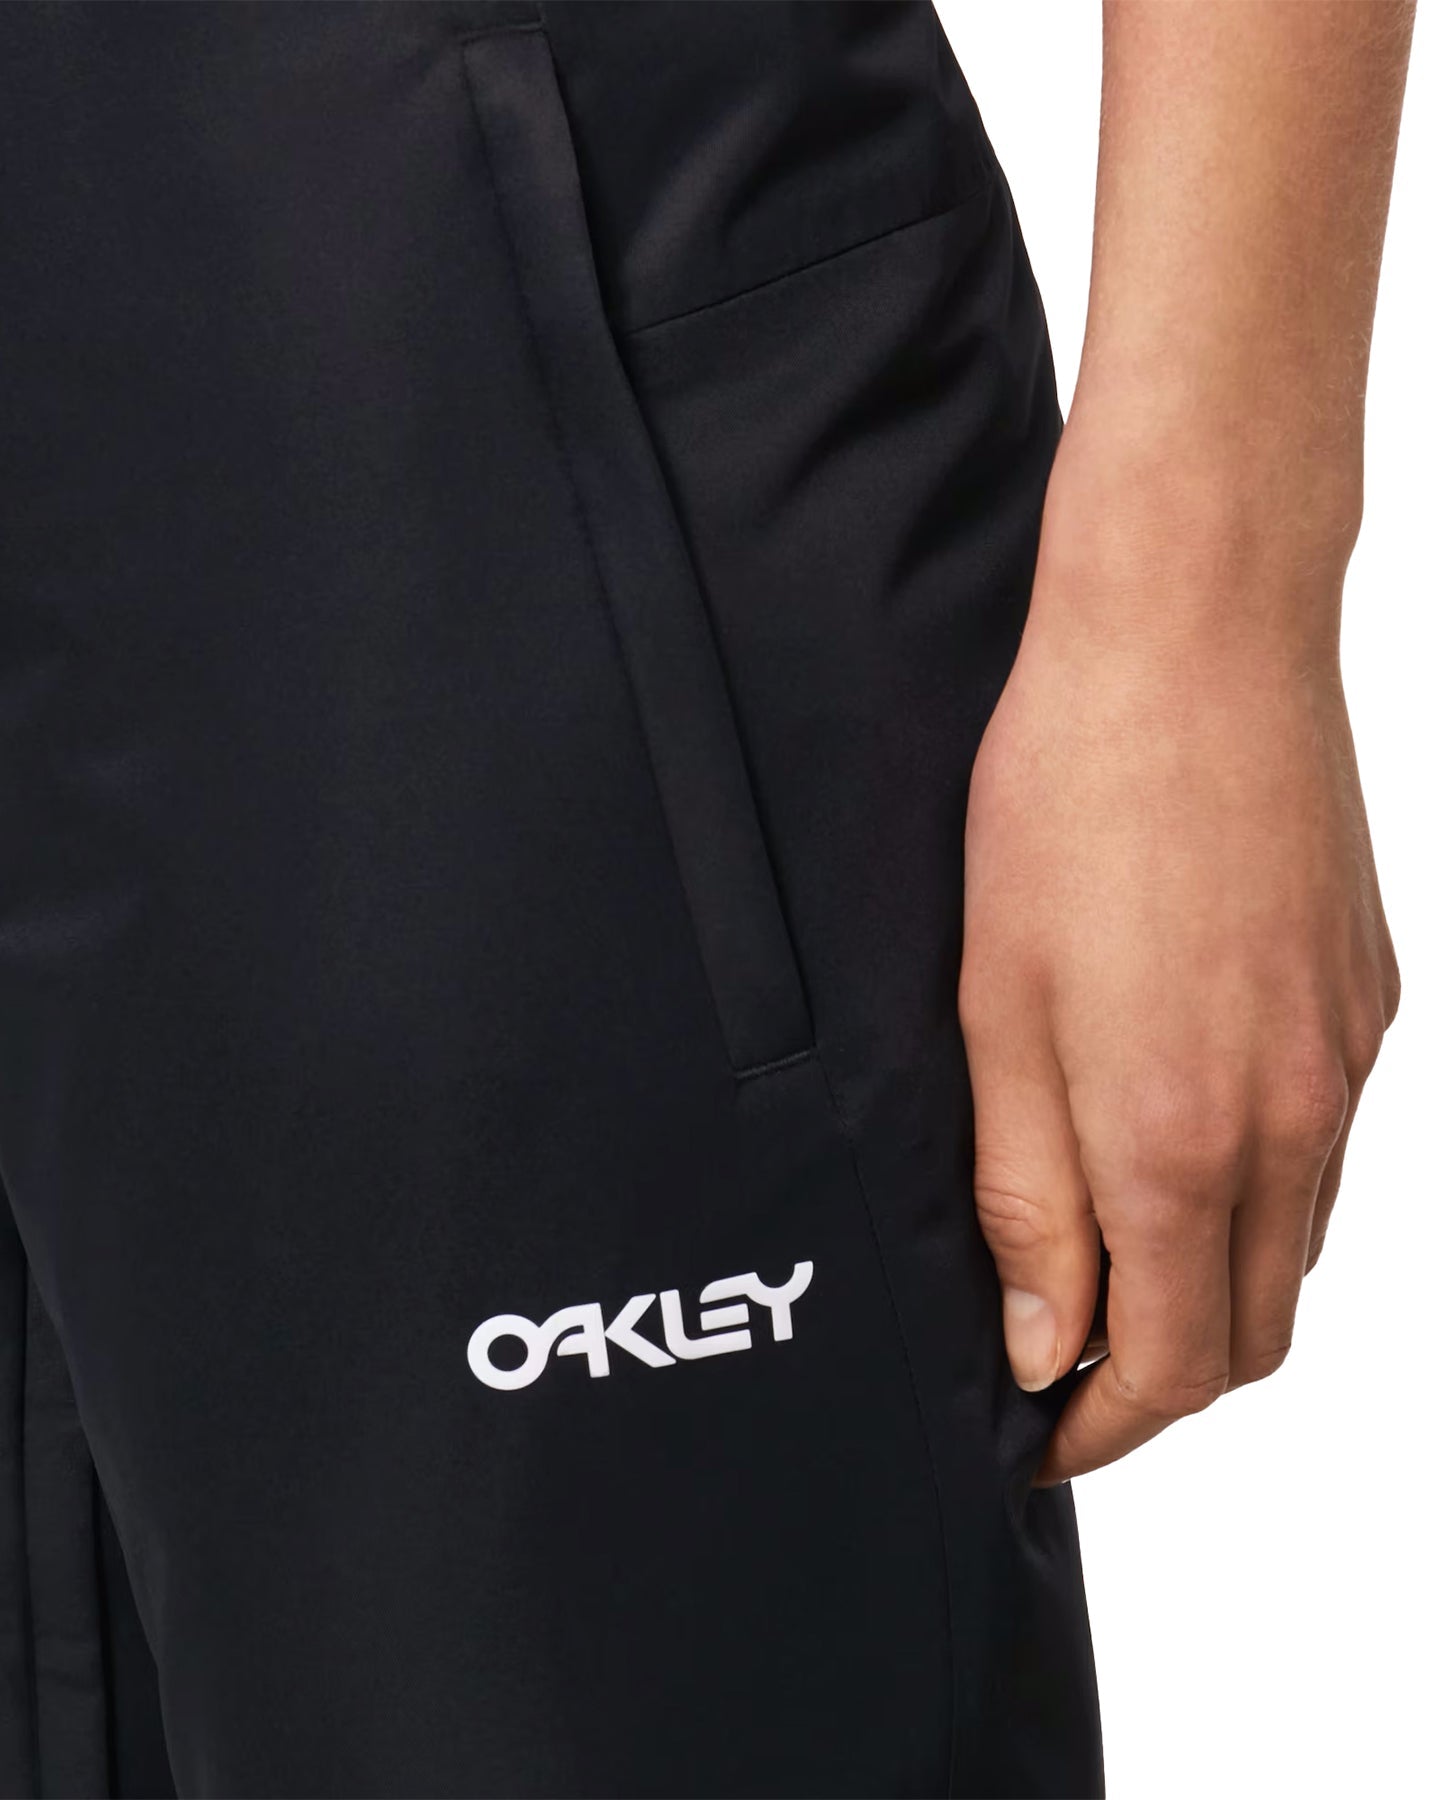 Oakley Jasmine Insulated Pant - Blackout Women's Snow Pants - SnowSkiersWarehouse